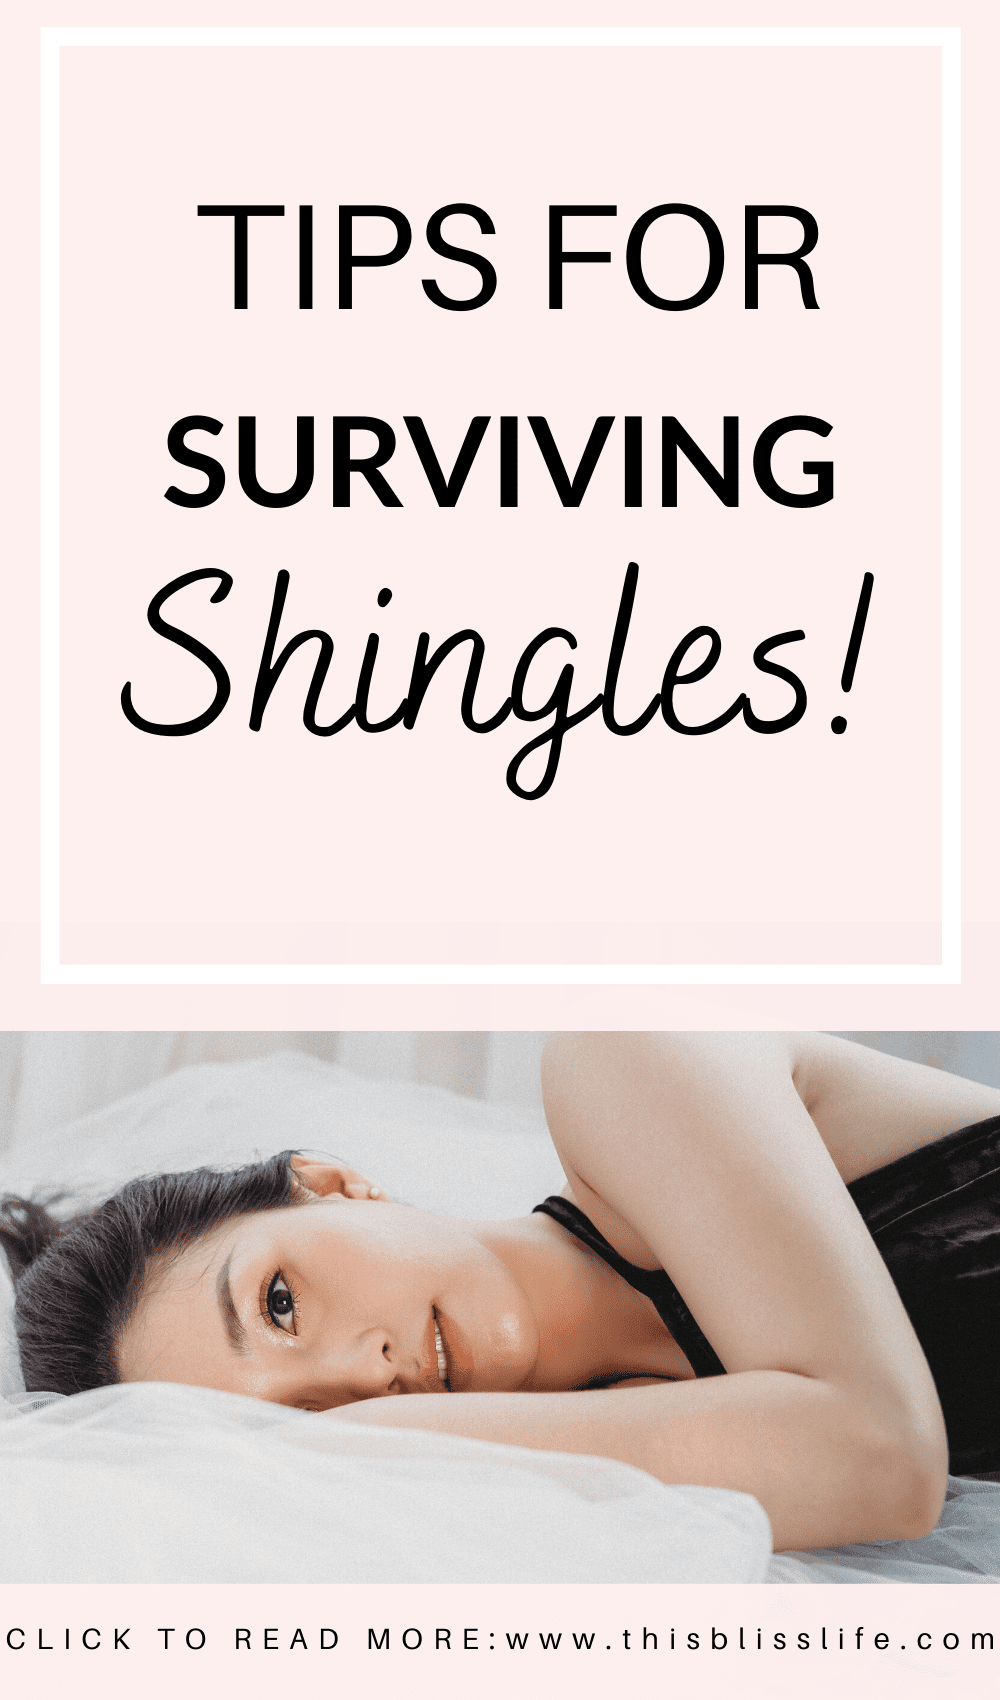 Tips for surviving shingles!